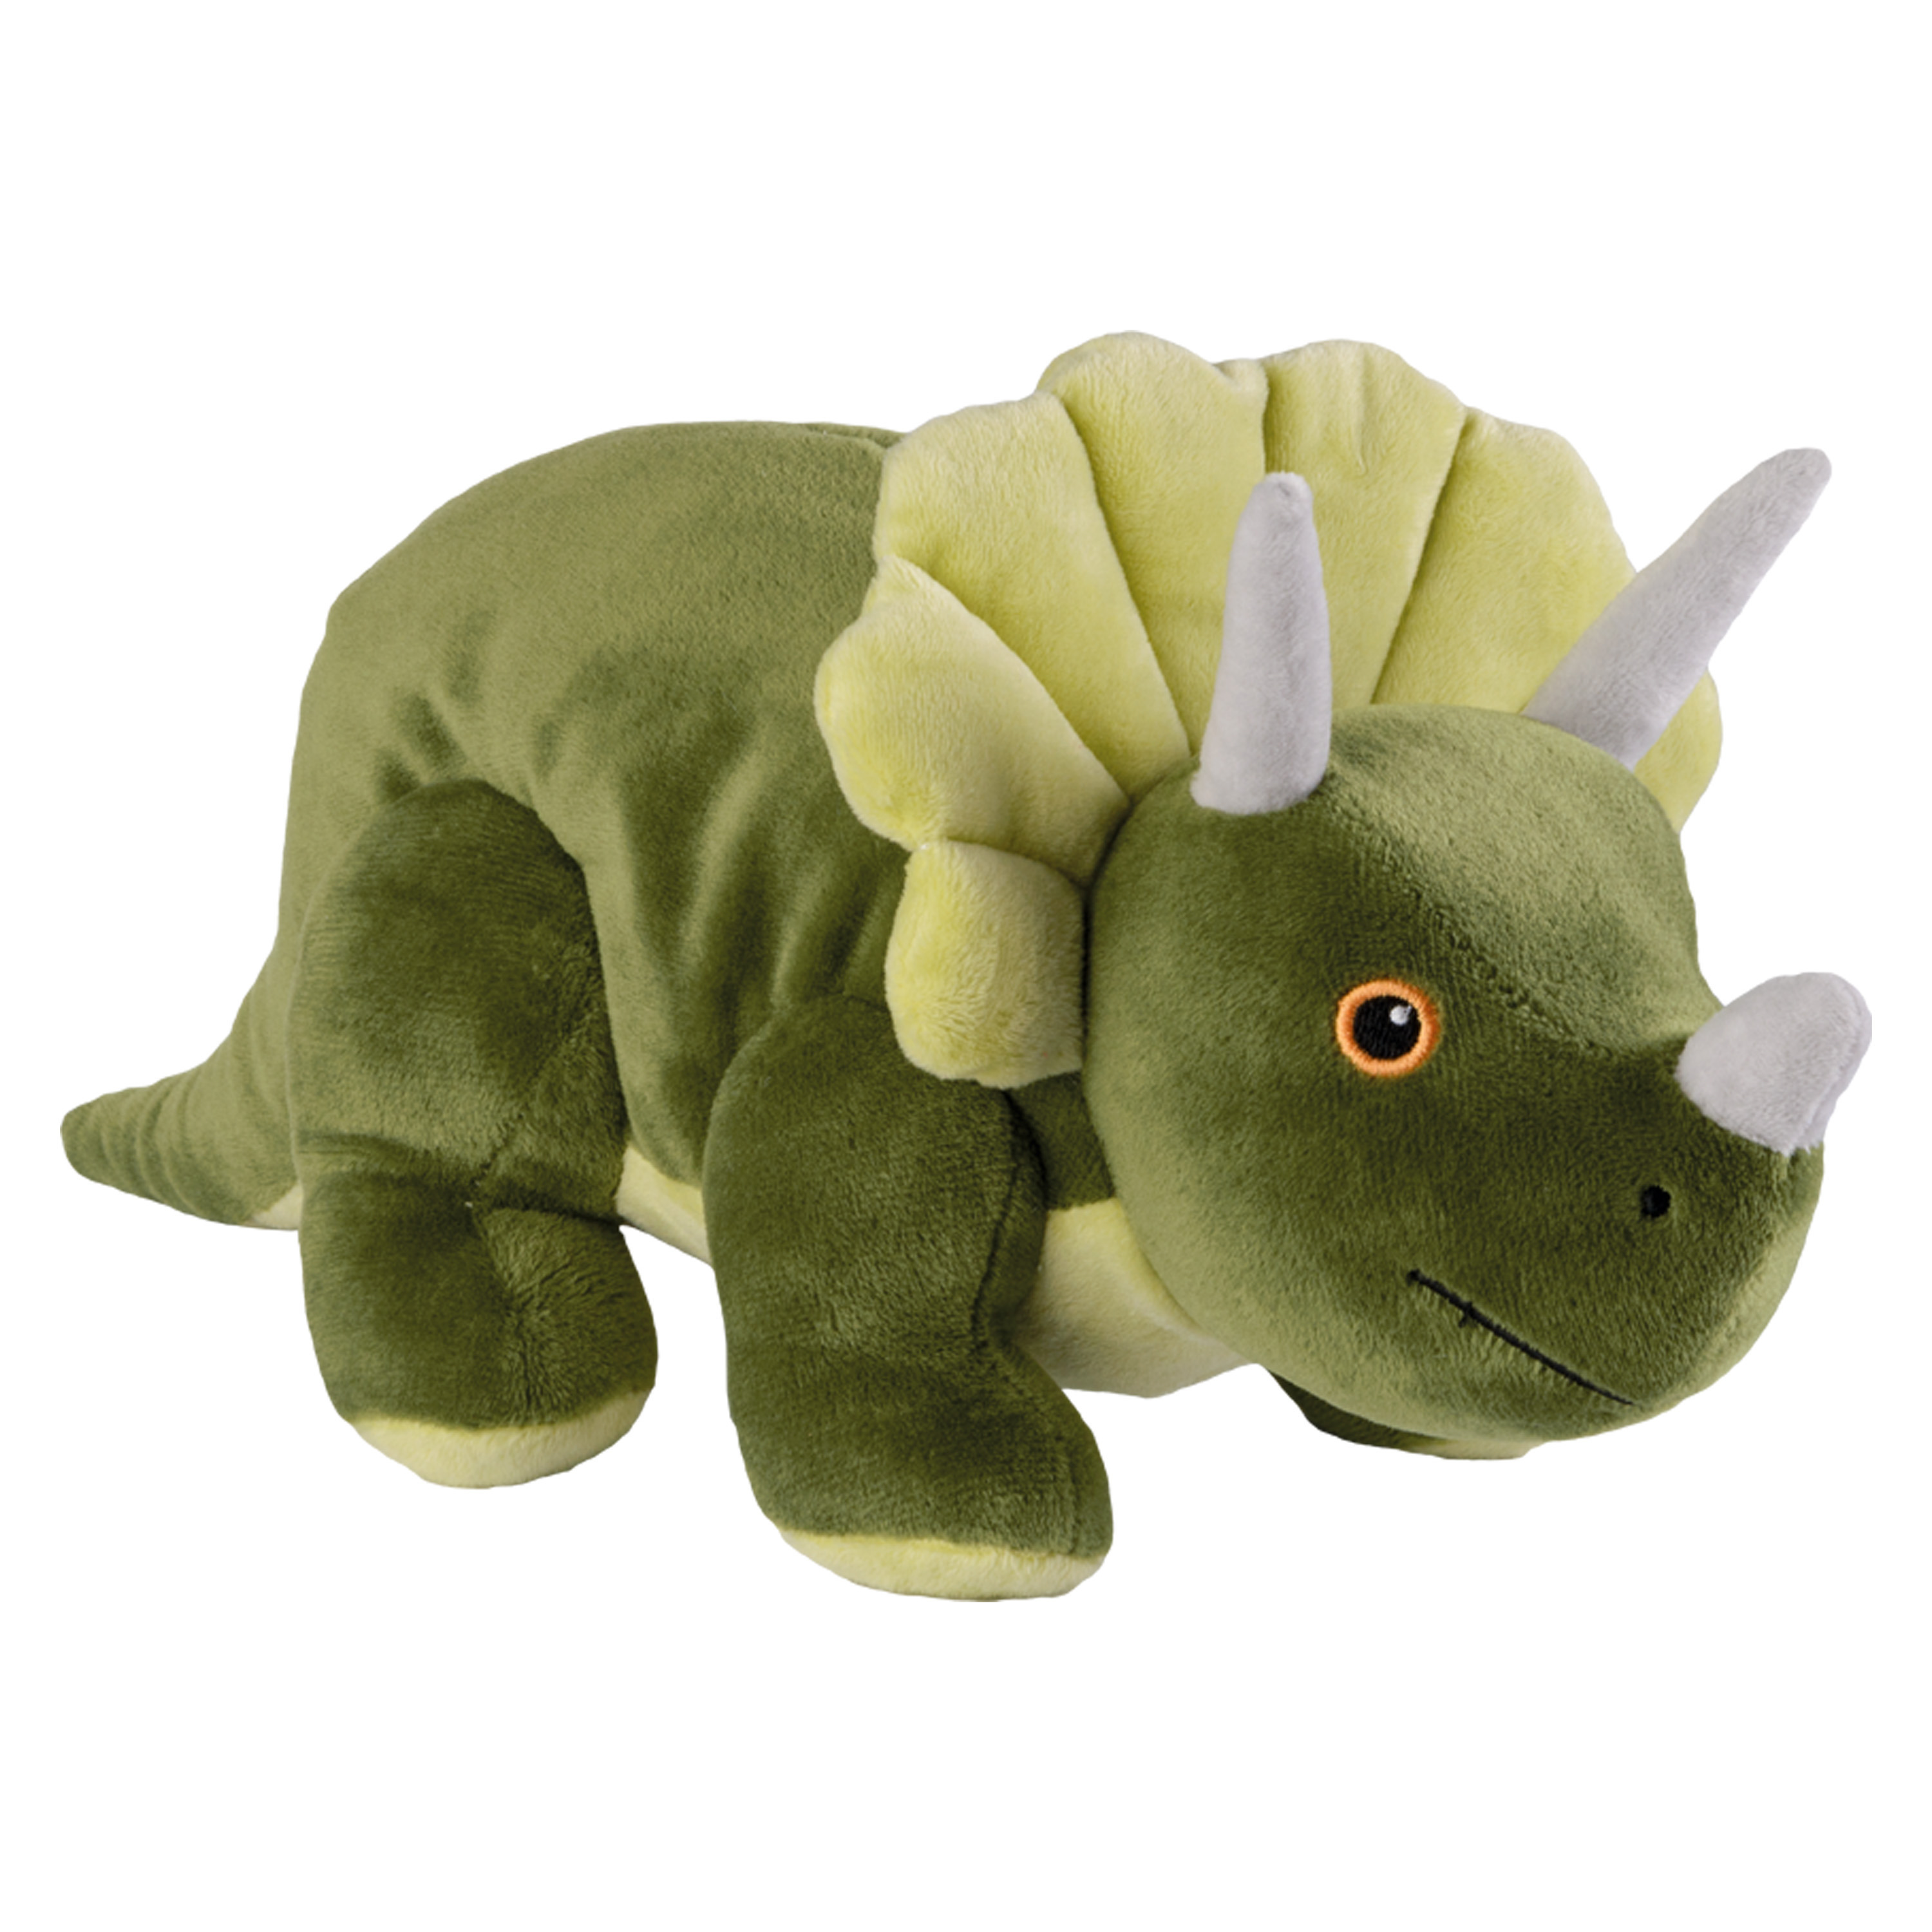 Warmte-magnetron opwarm knuffel Dinosaurus-Triceratops groen 35 cm pittenzak